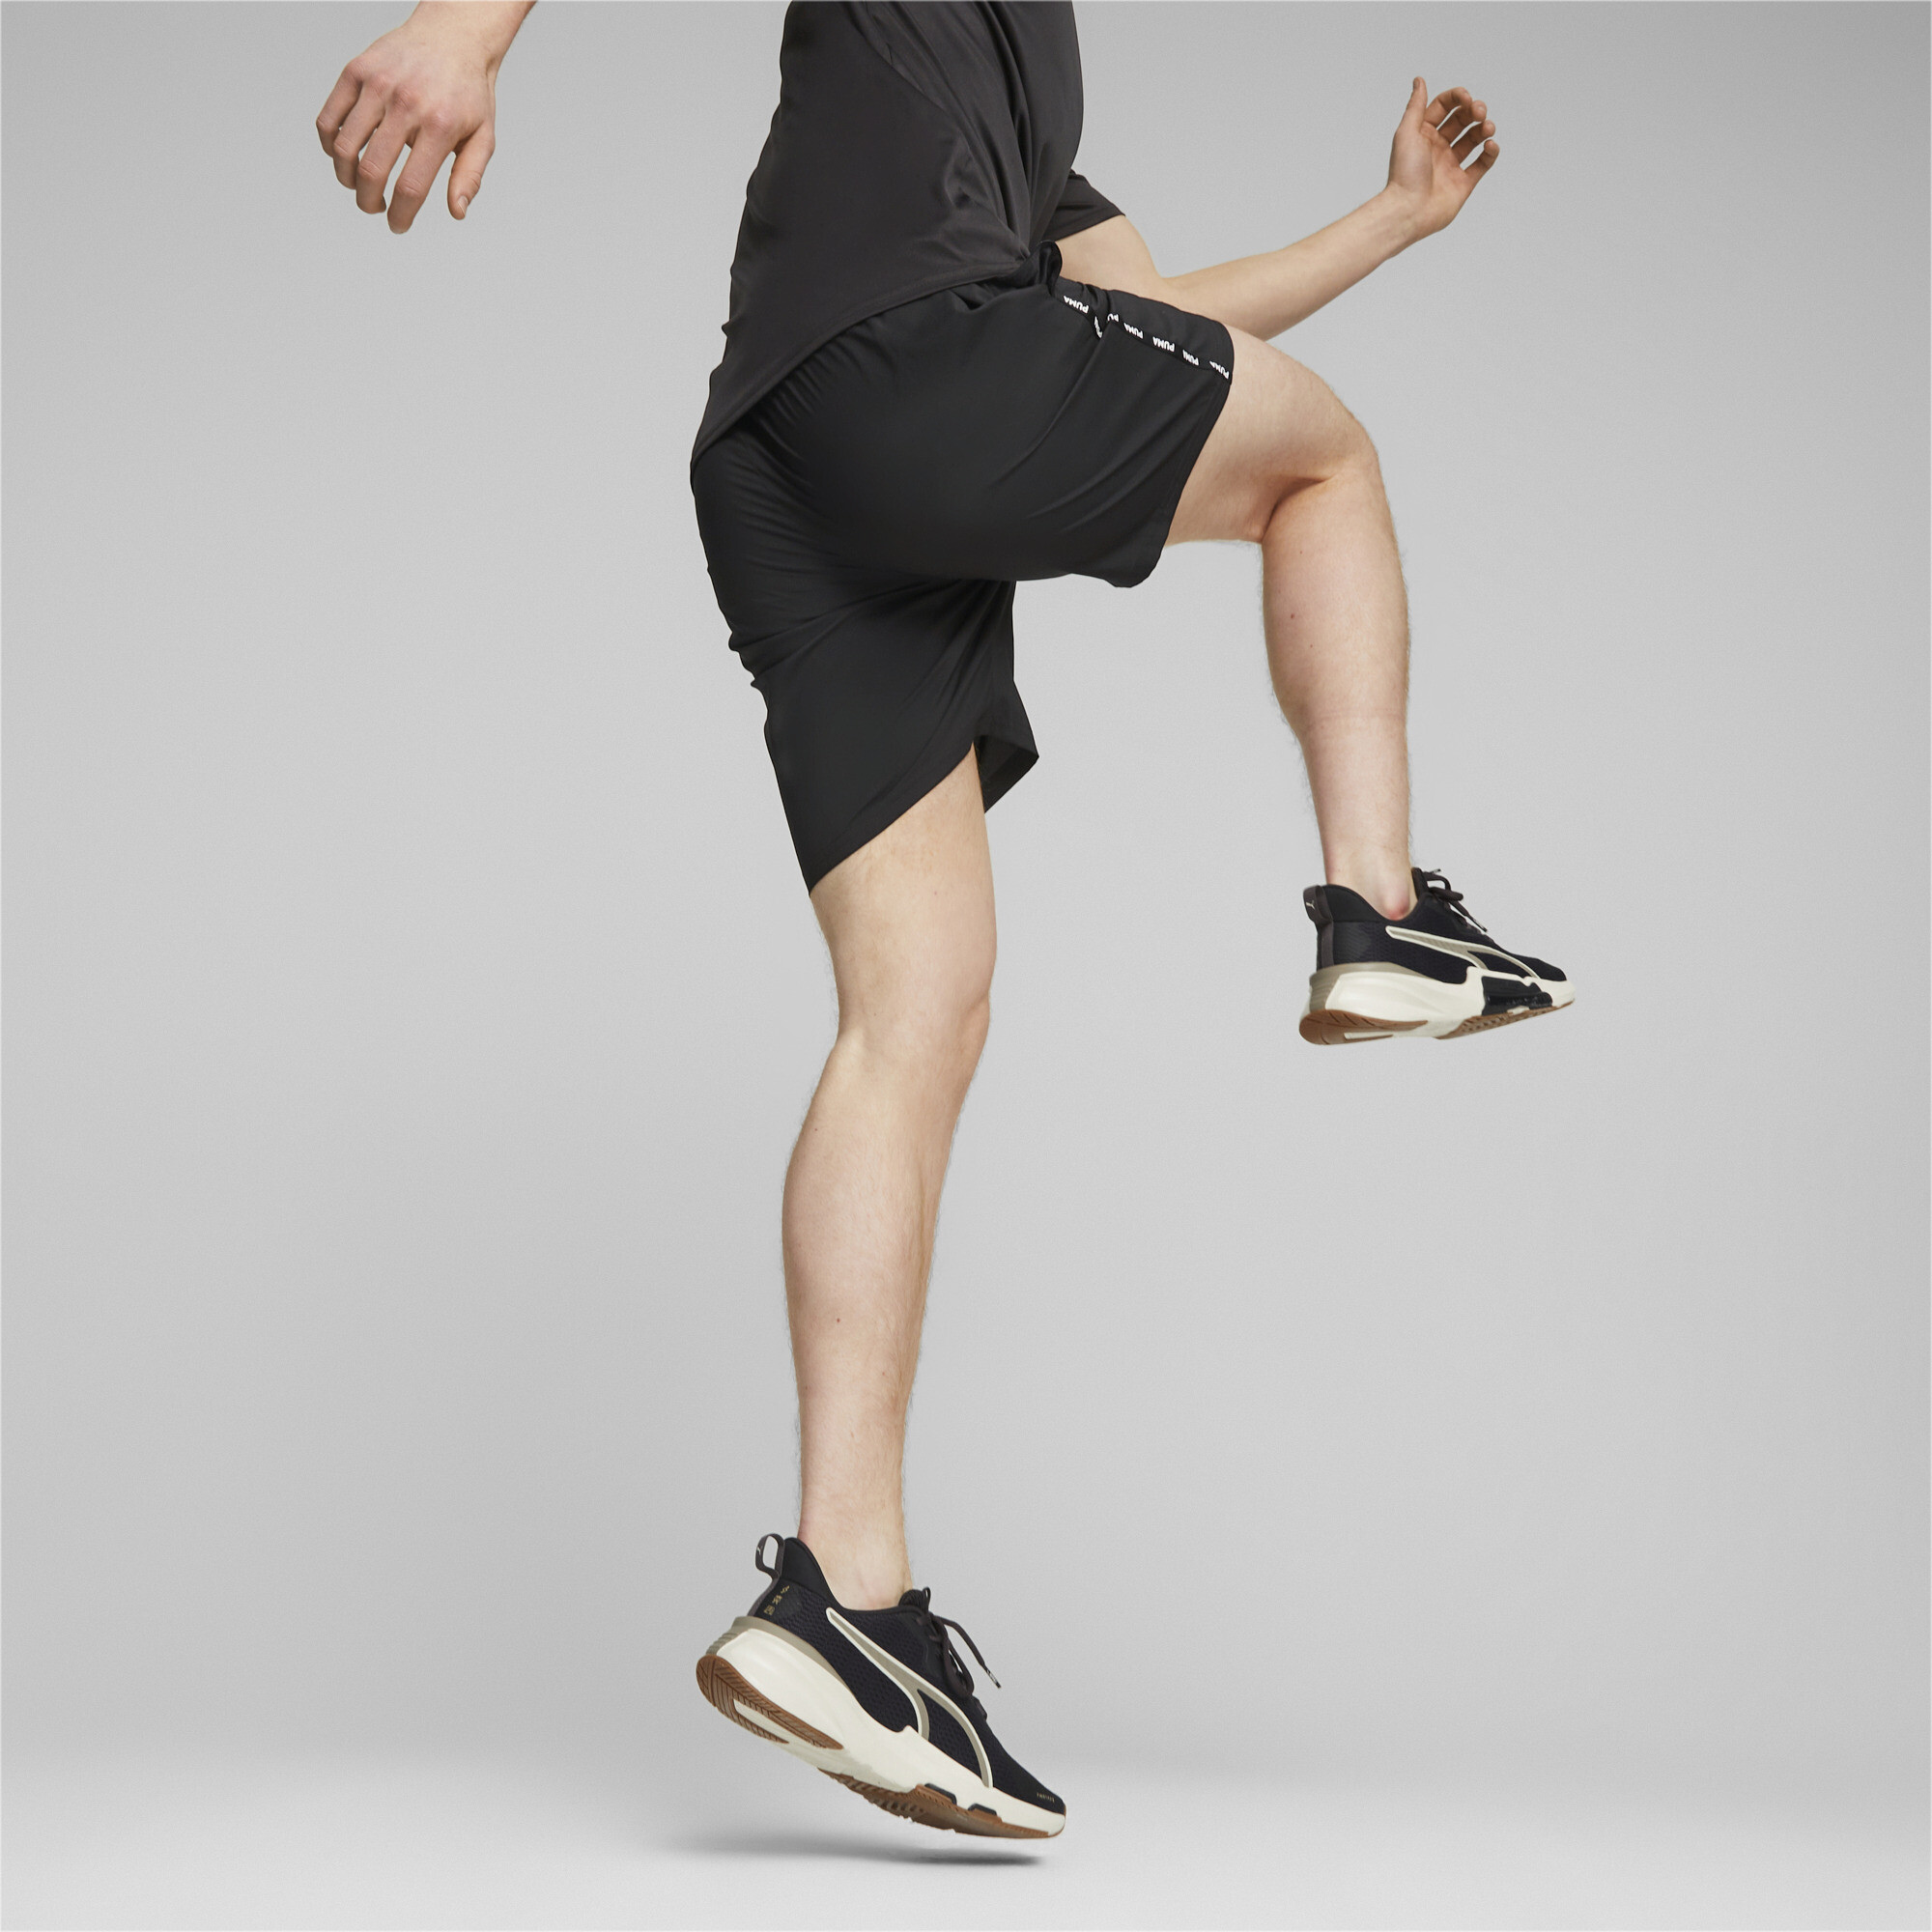 Men's PUMA Fit 7 Training Shorts In Black, Size XS